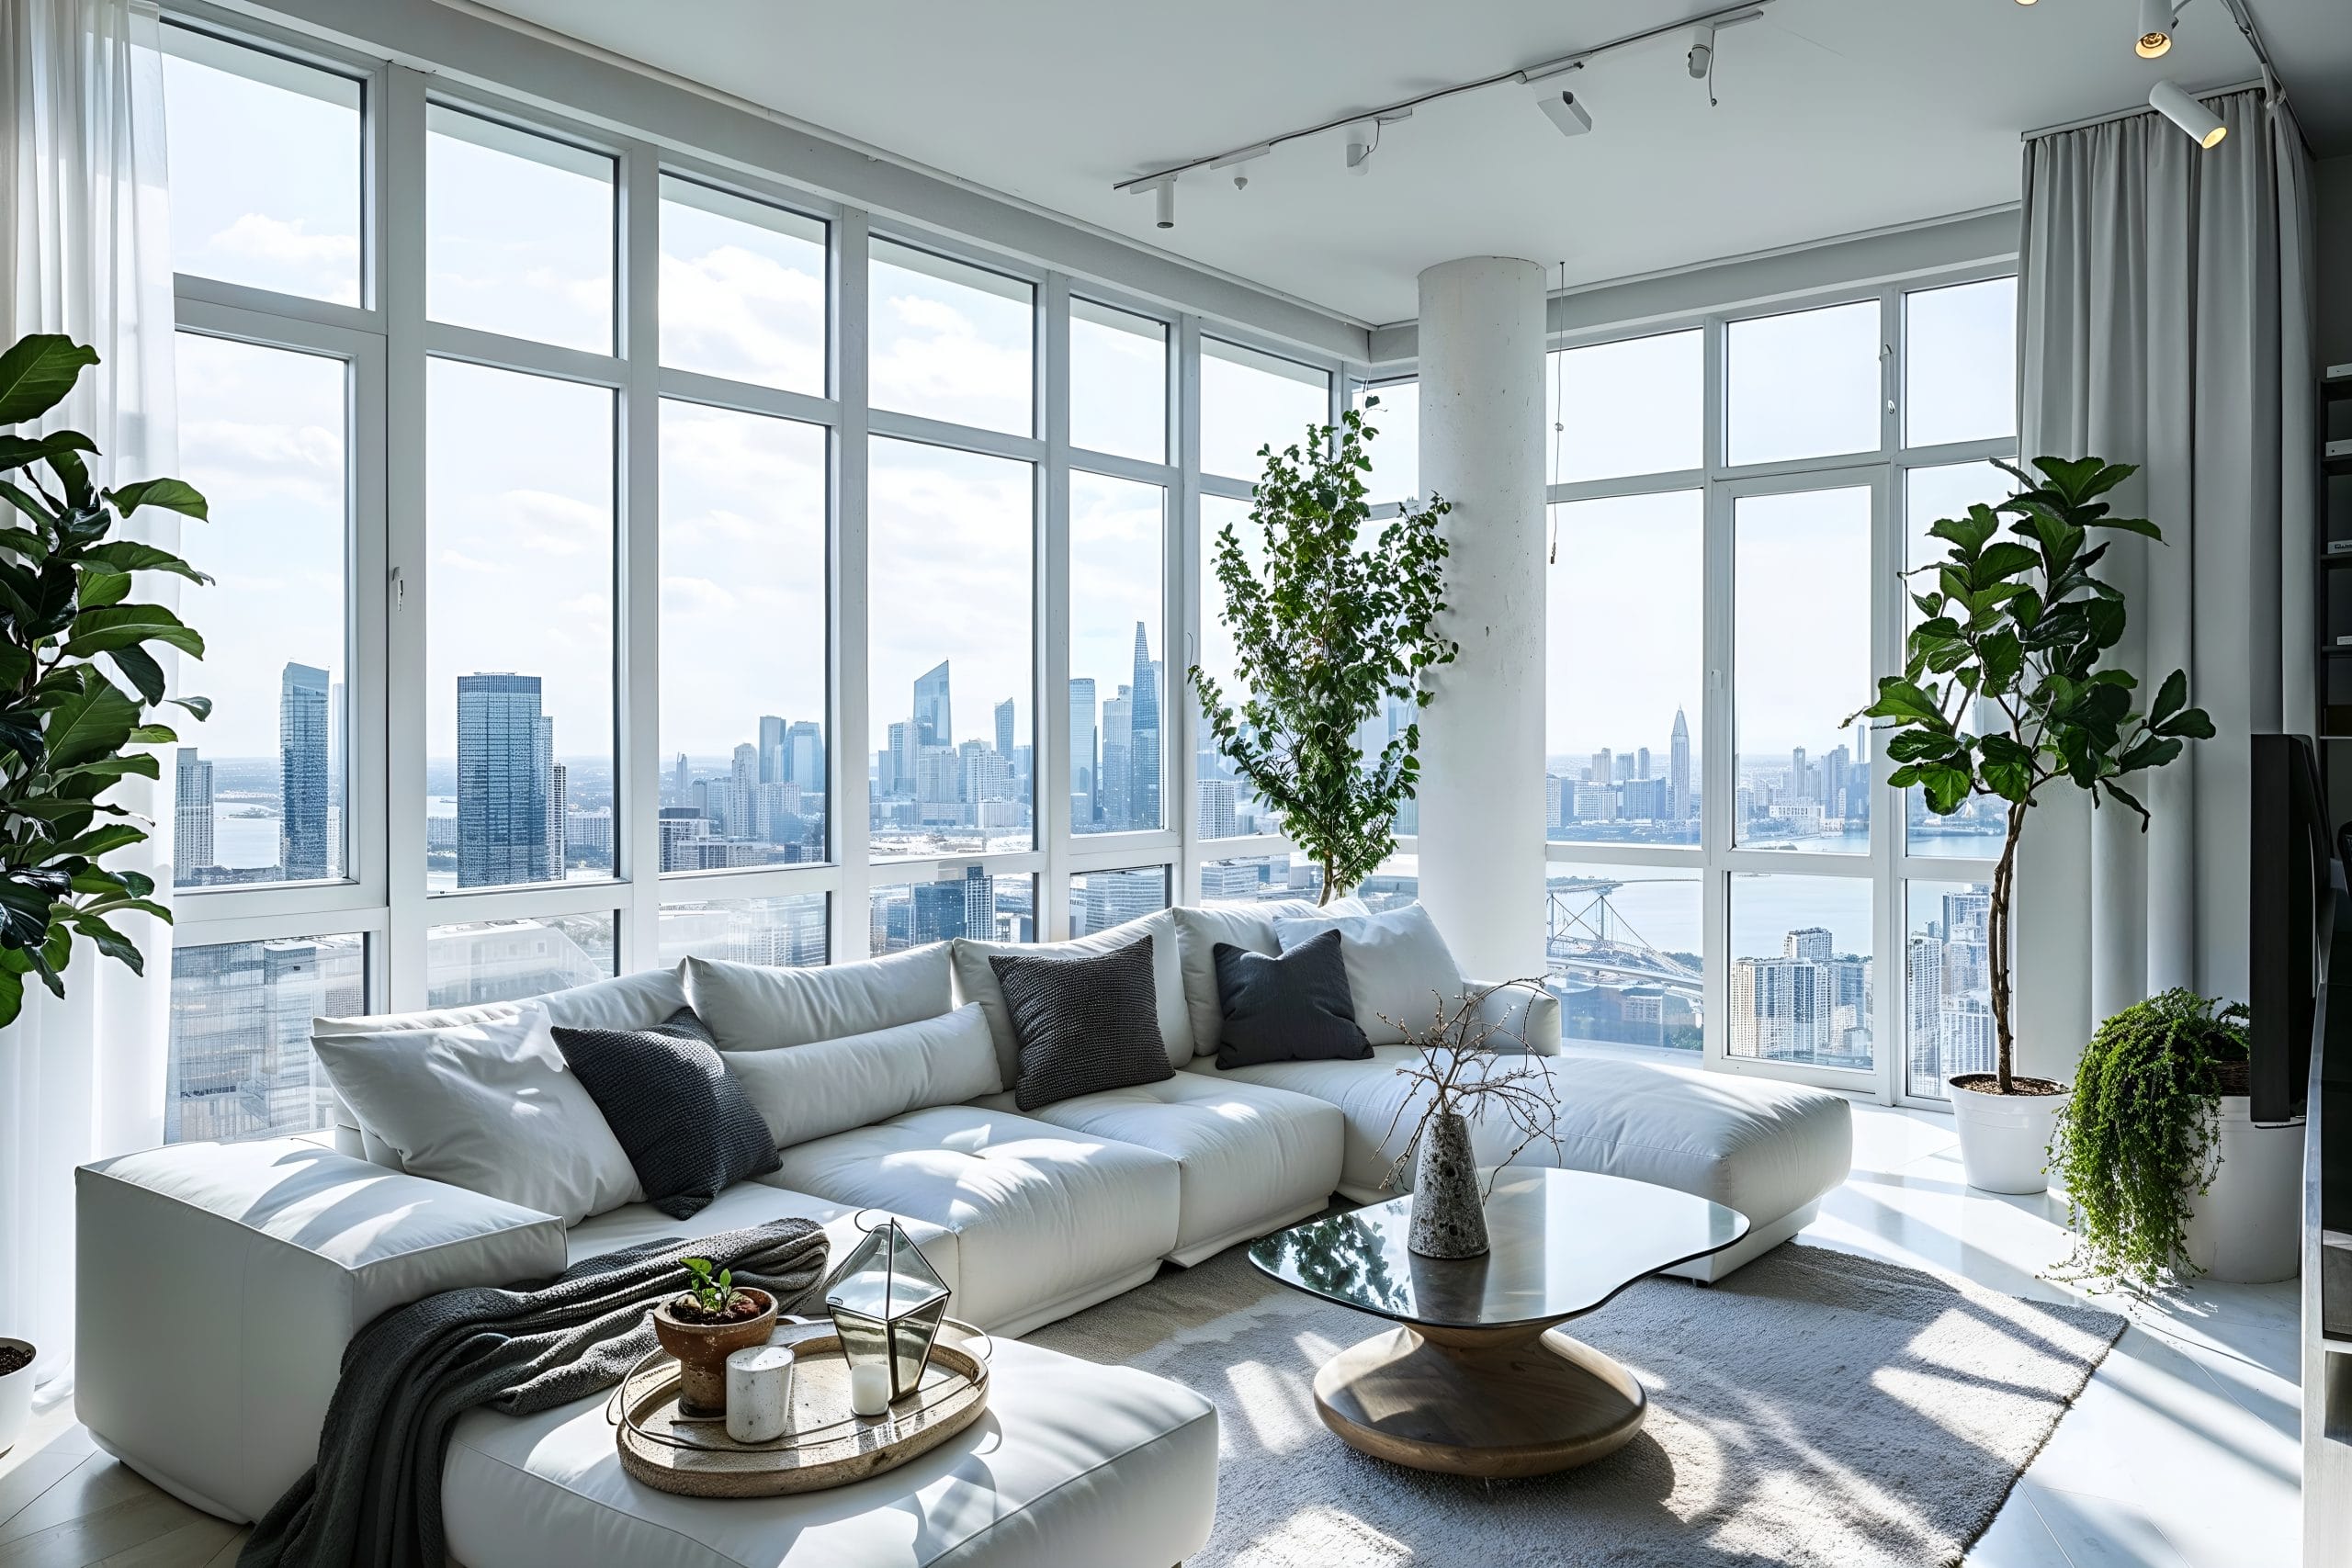 Luxe NYC apartment interior